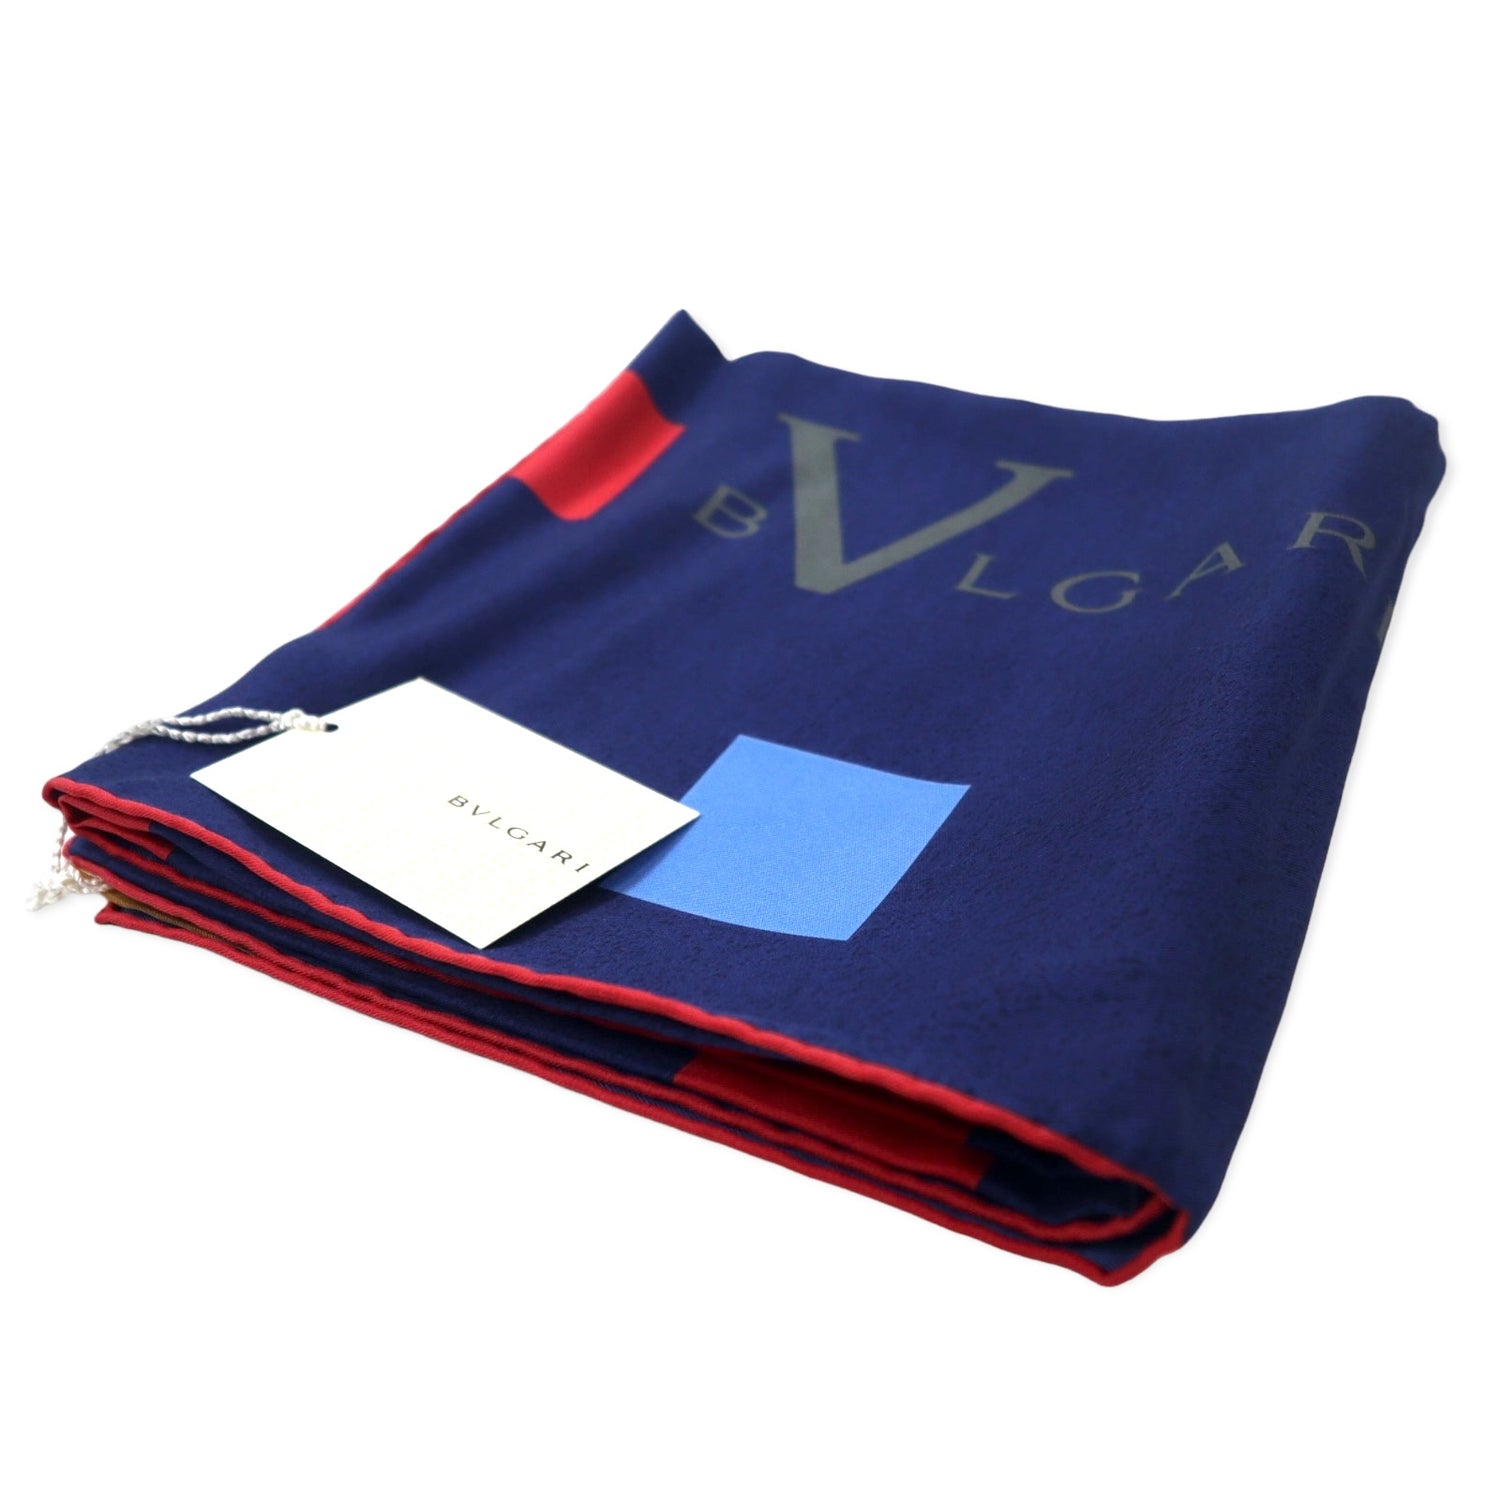 BVLGARI イタリア製 ロゴモチーフ スカーフ ネイビー シルク 未使用品 